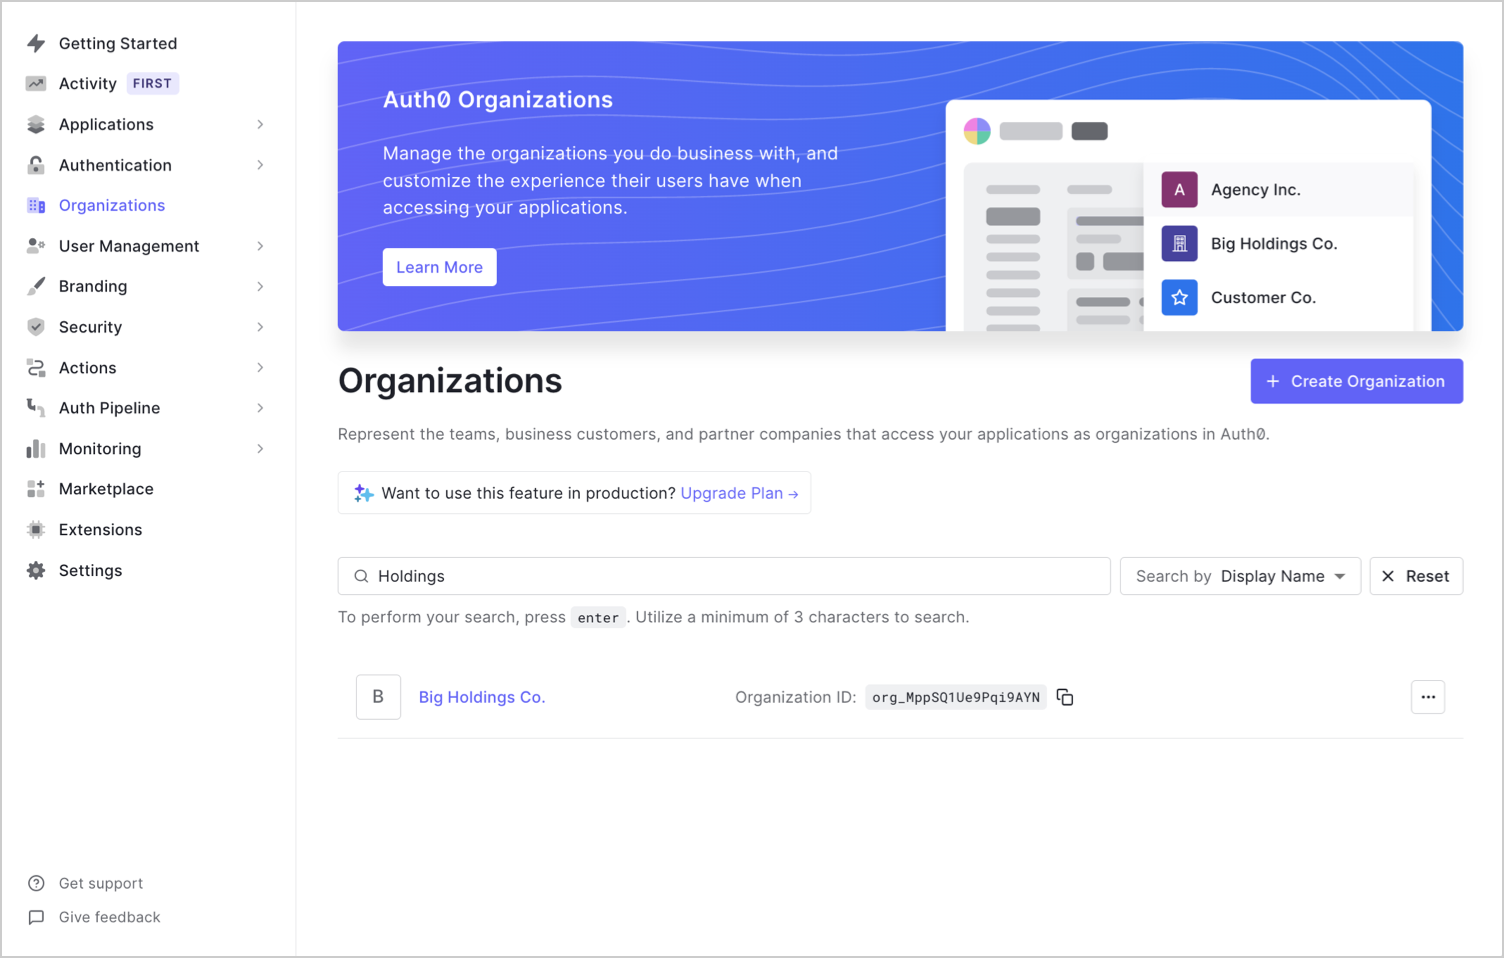 Auth0 Dashboard - Search Organizations